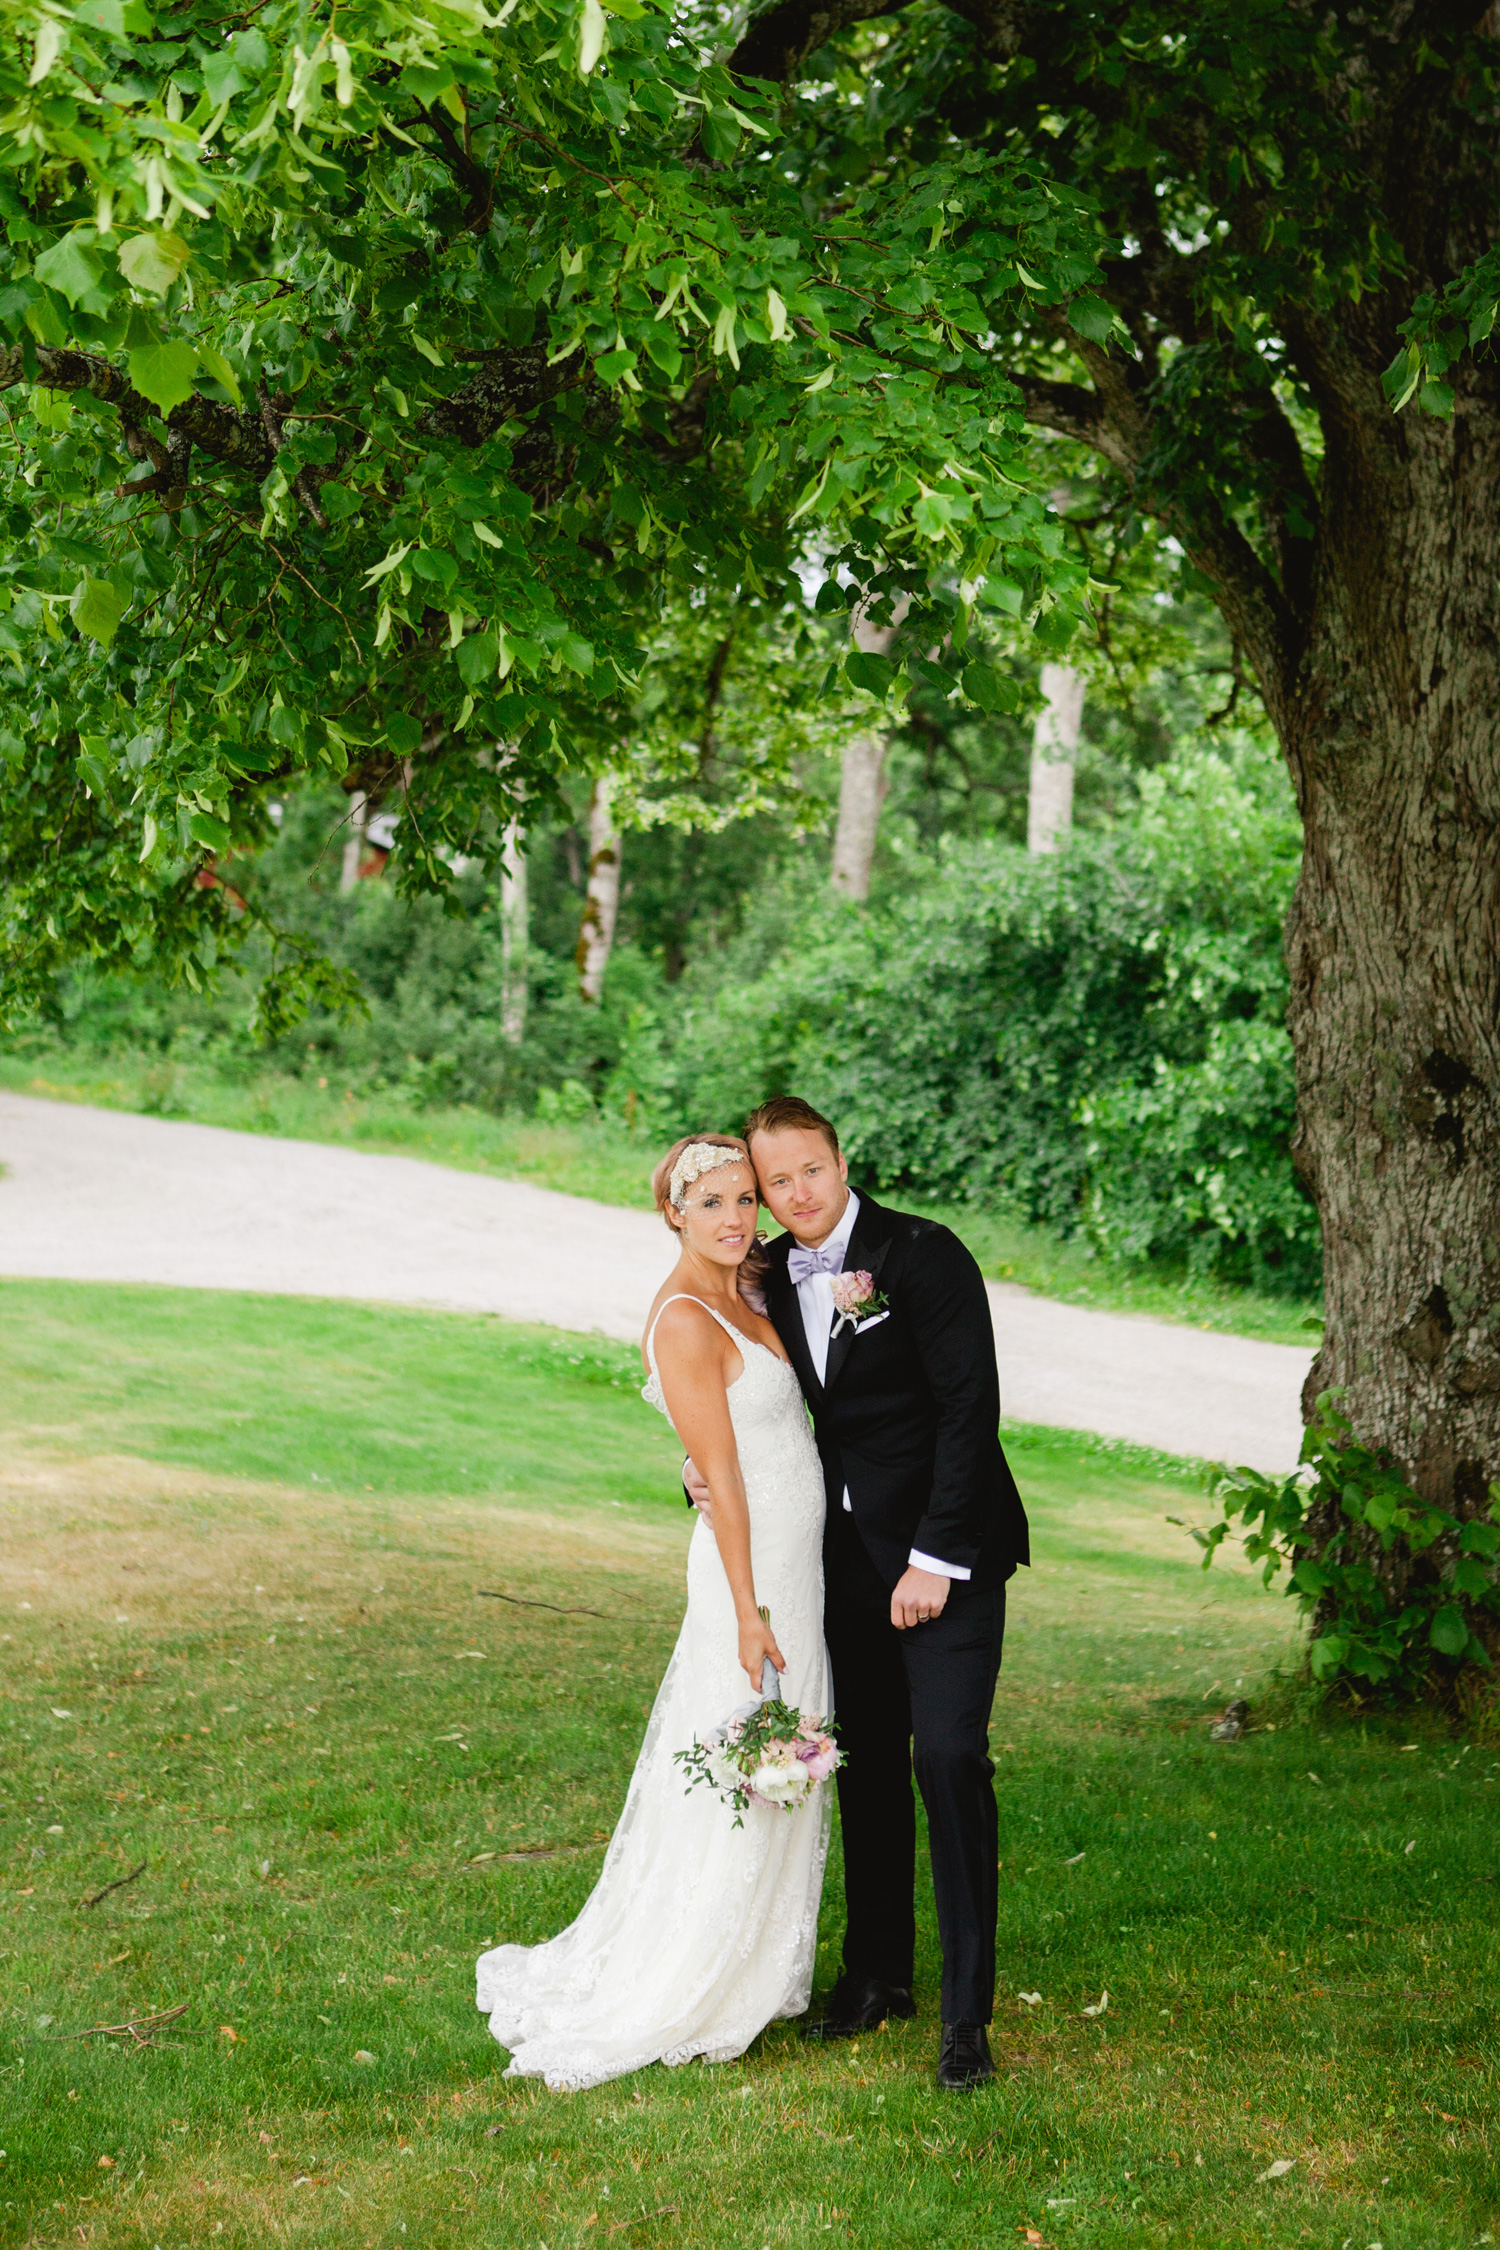 014-sweden-vidbynäs-wedding-photographer-videographer.jpg